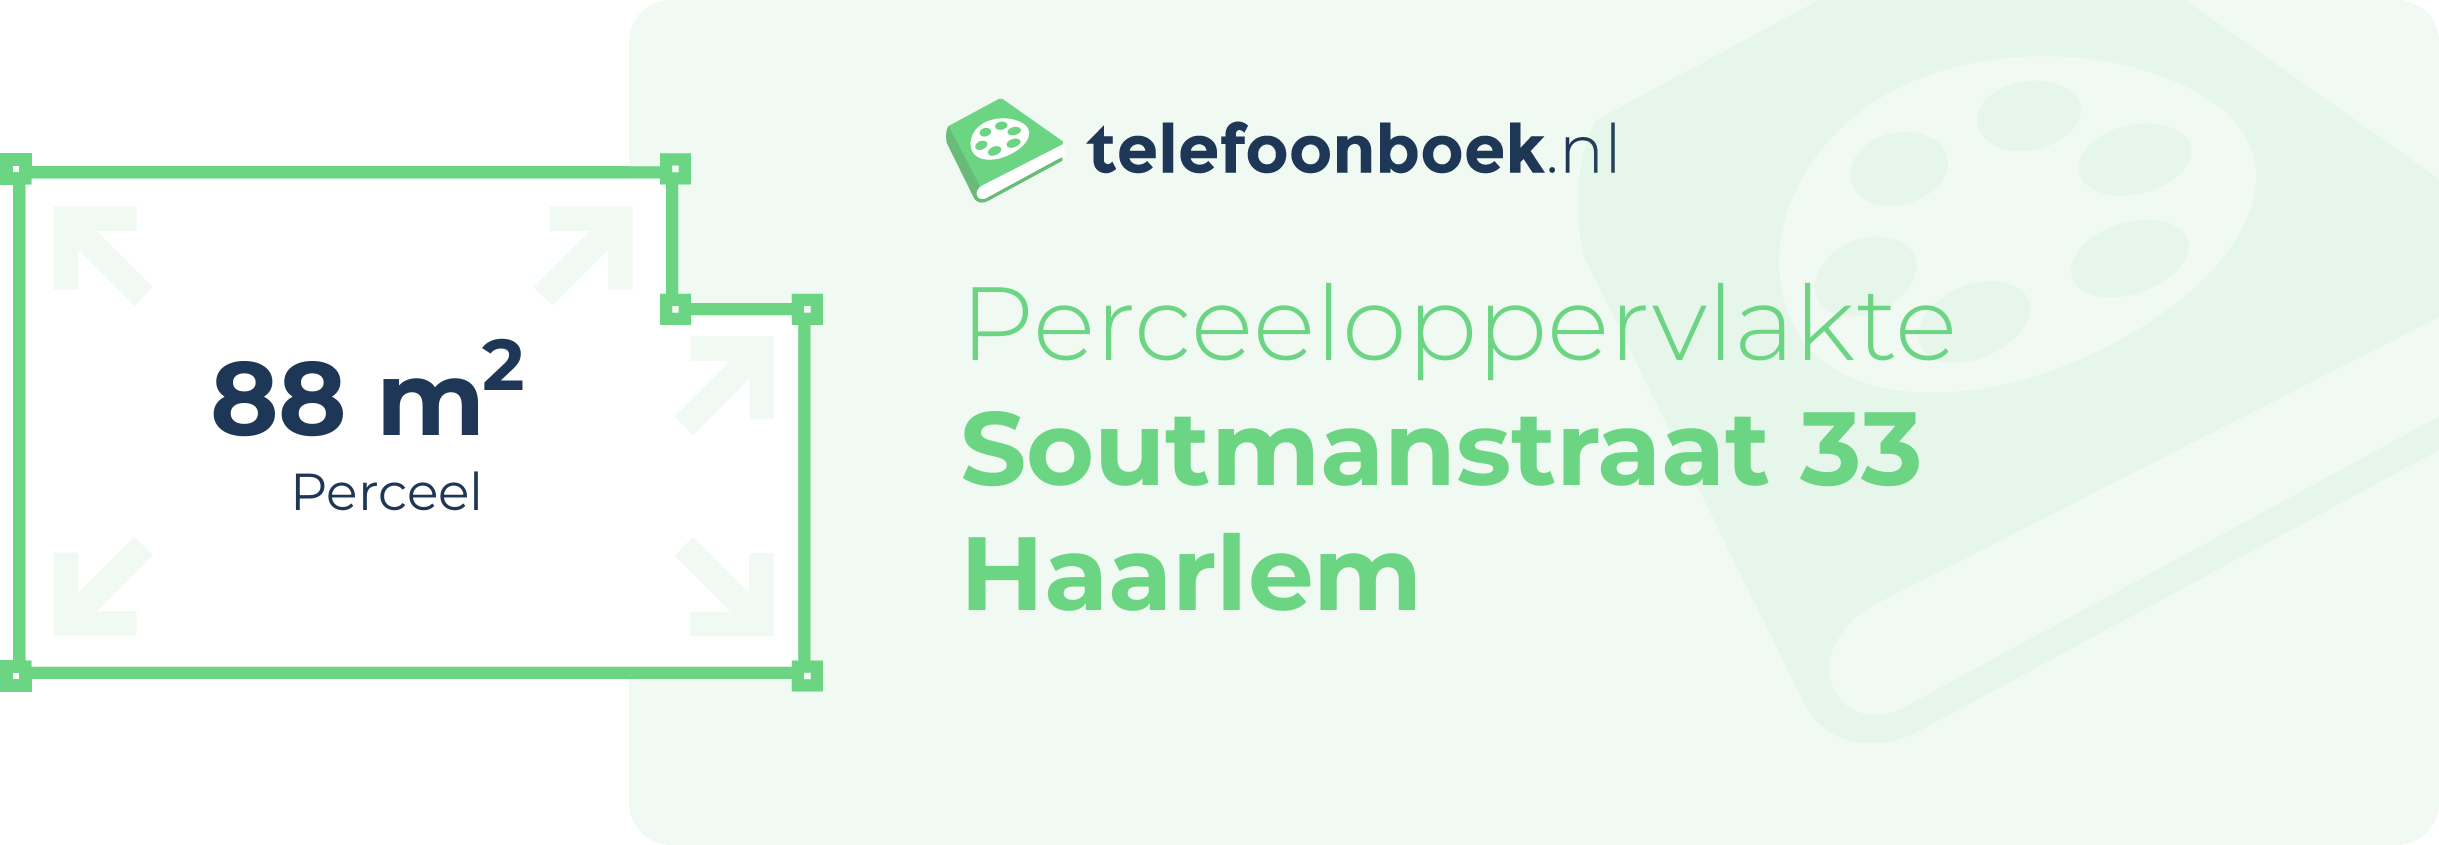 Perceeloppervlakte Soutmanstraat 33 Haarlem